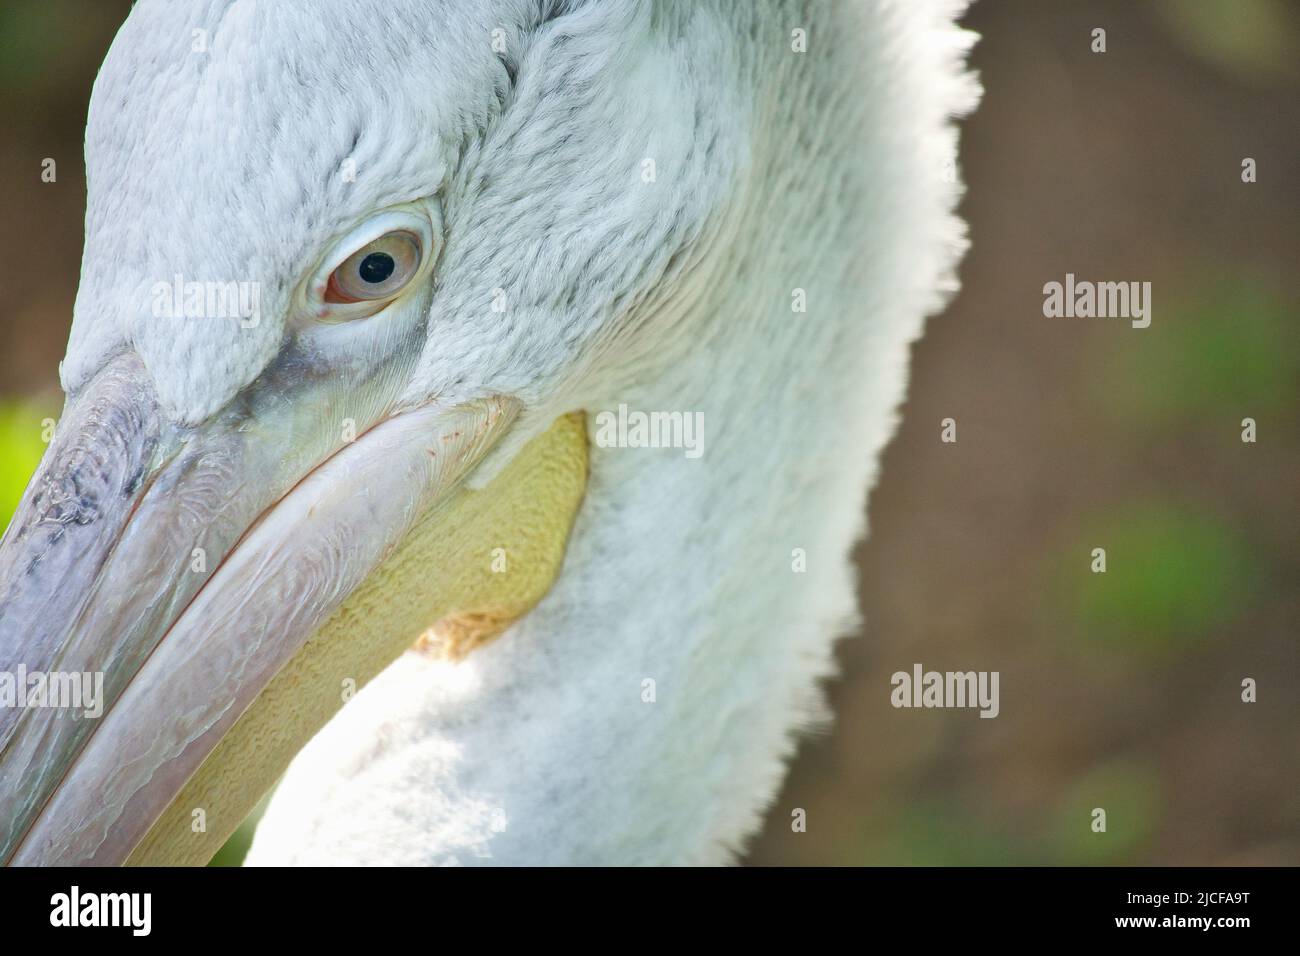 Pelican in portrait. White plumage, large beak, in a large marine bird. Animal photo Stock Photo